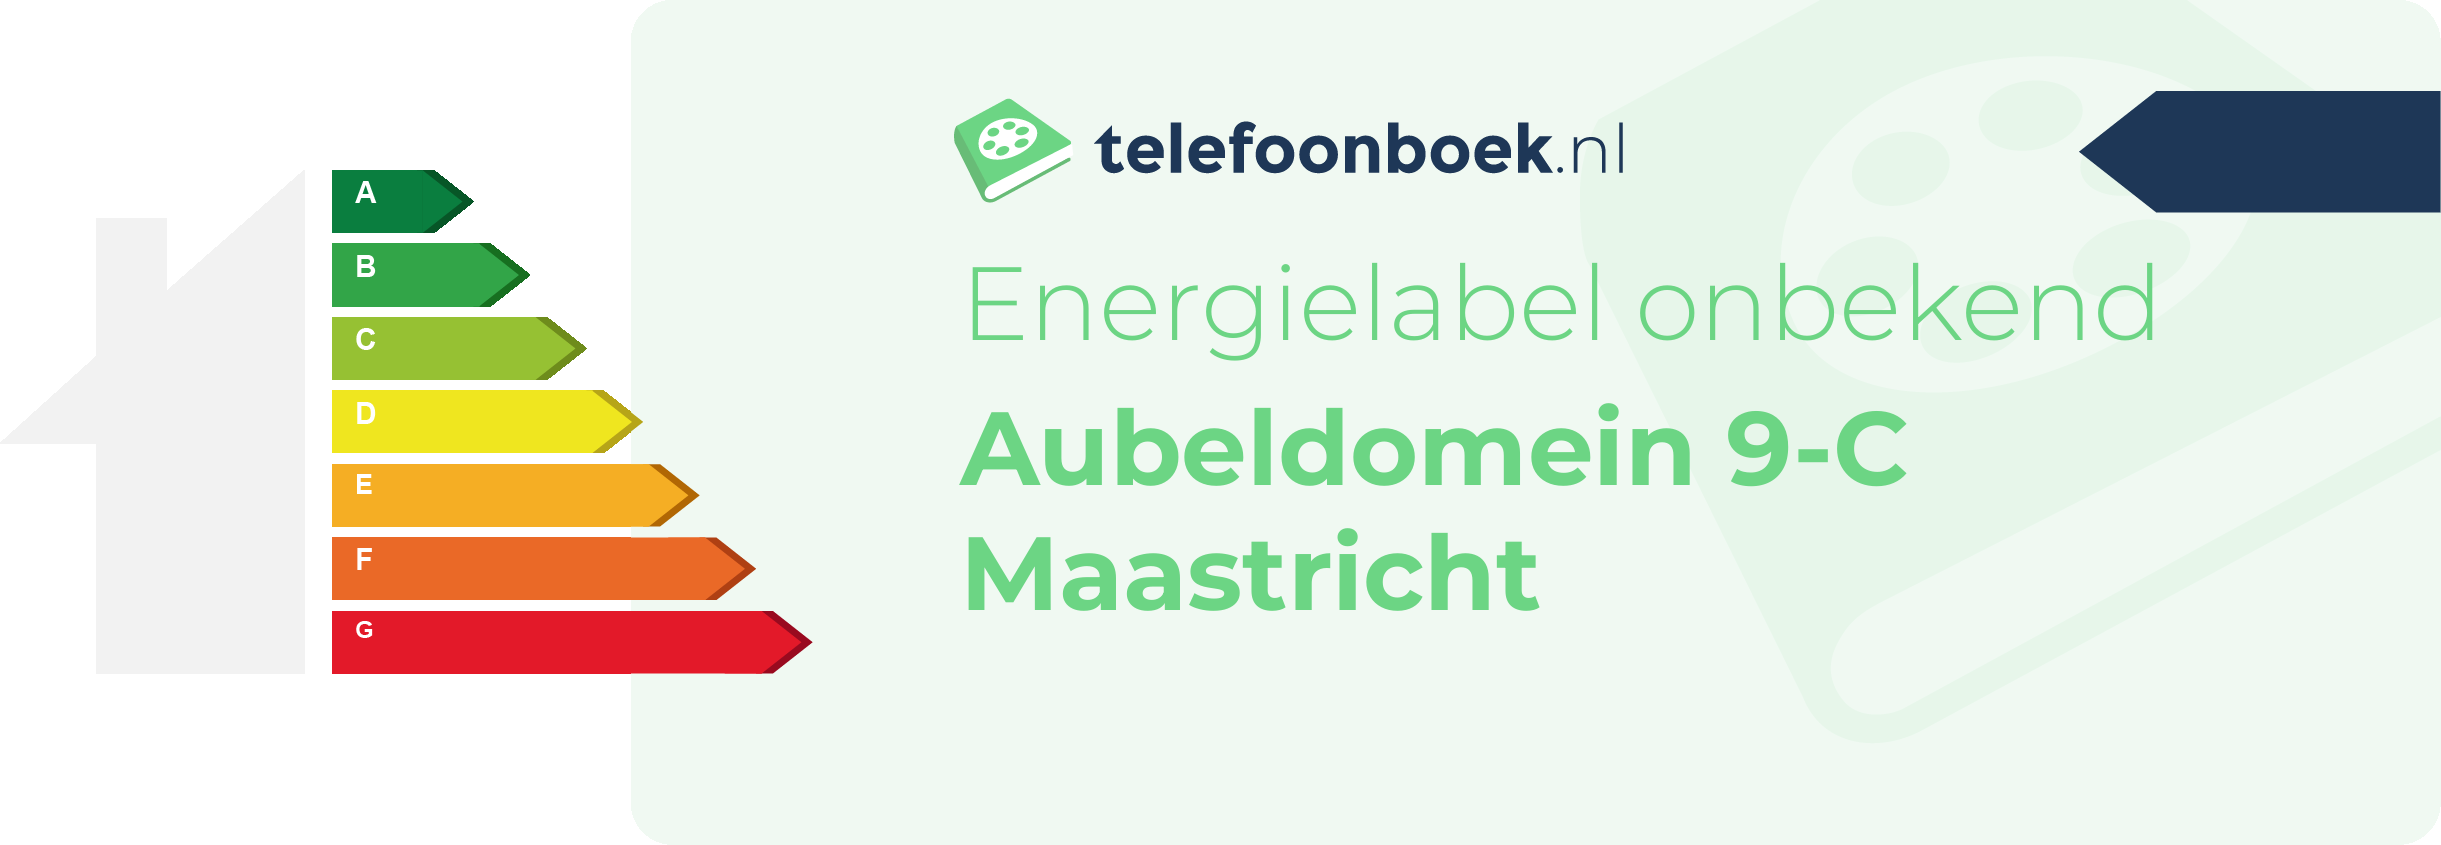 Energielabel Aubeldomein 9-C Maastricht